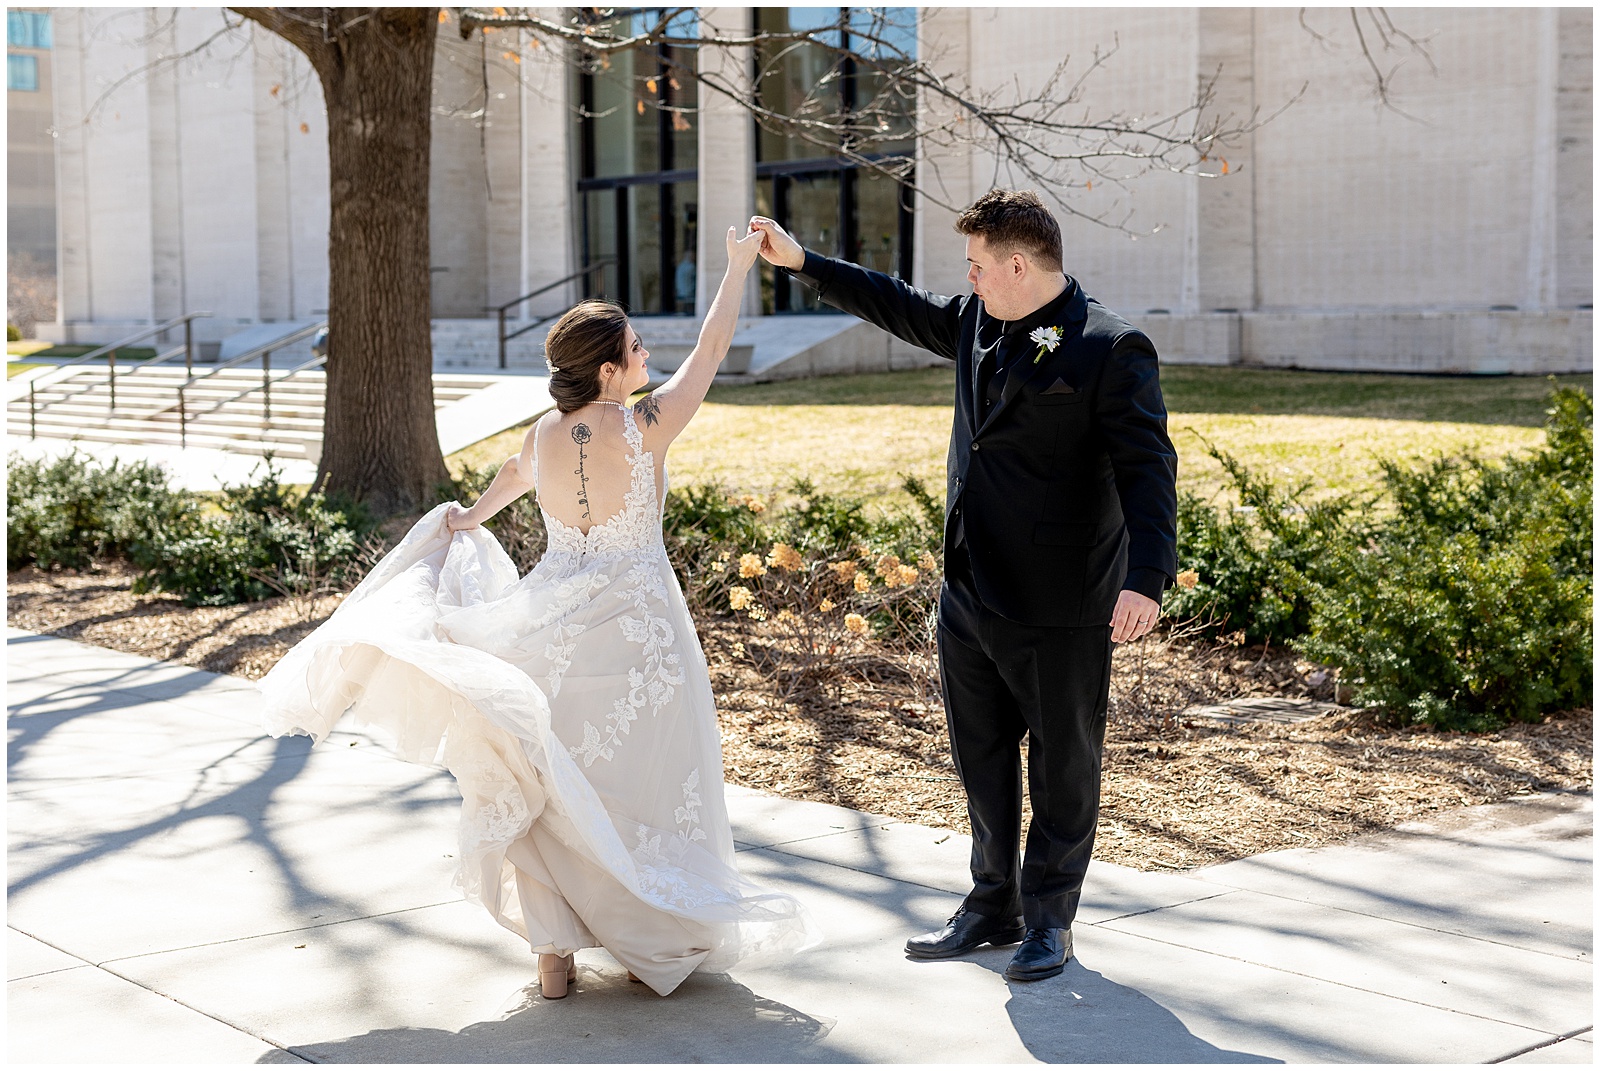 Lincoln Nebraska Wedding at the Sheldon Art Museum with a reception at the Cornhusker Marriott